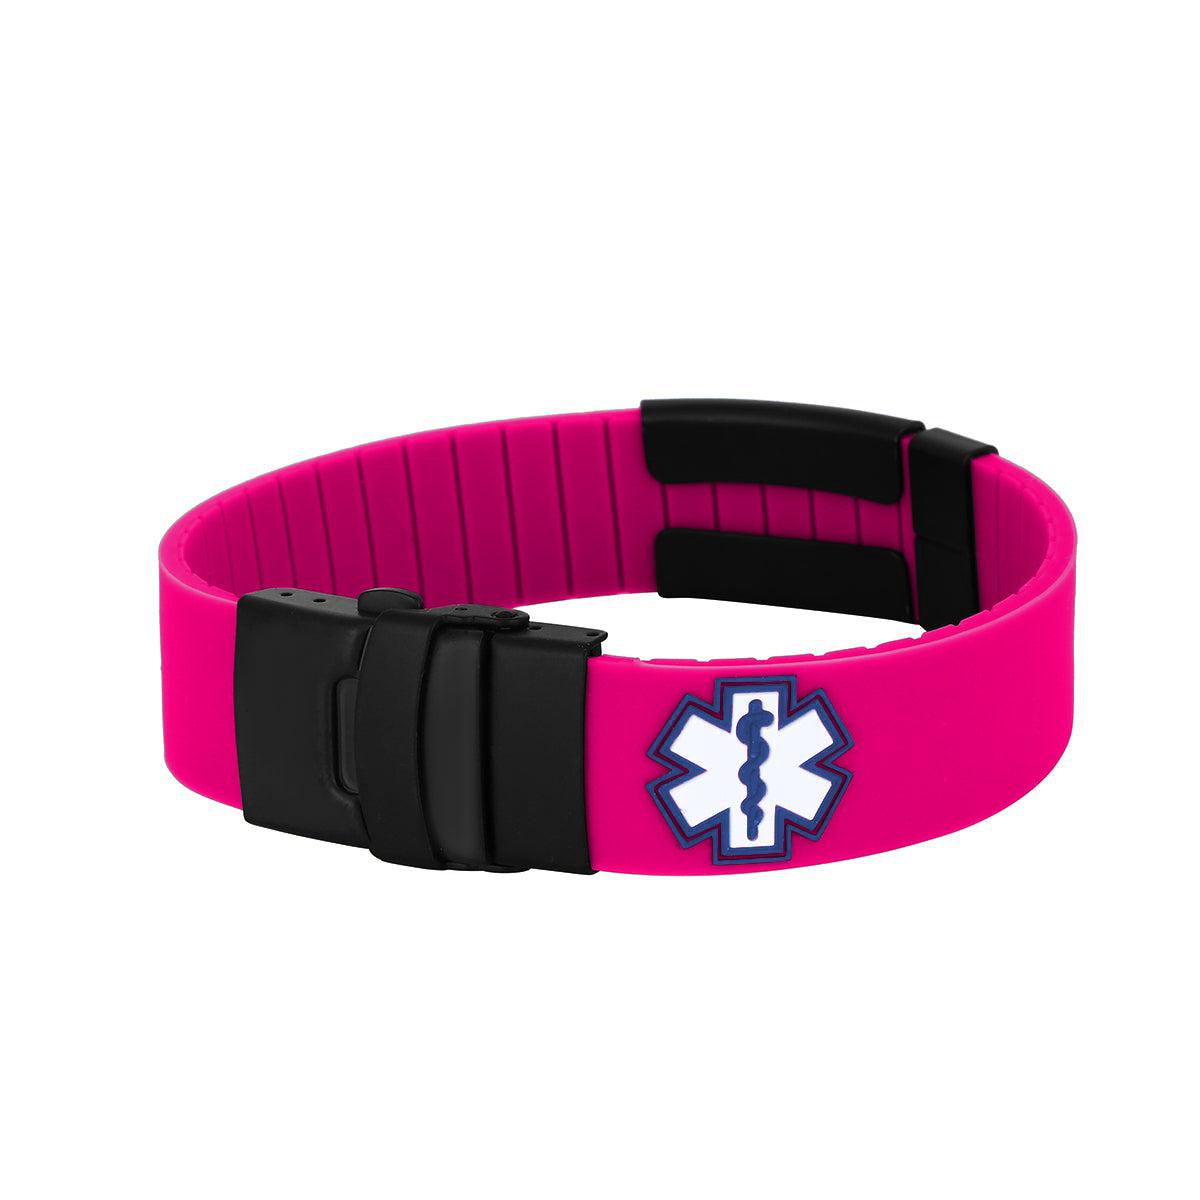 Kopo Pink Adjustable Silicone Sports Medical ID Bracelet